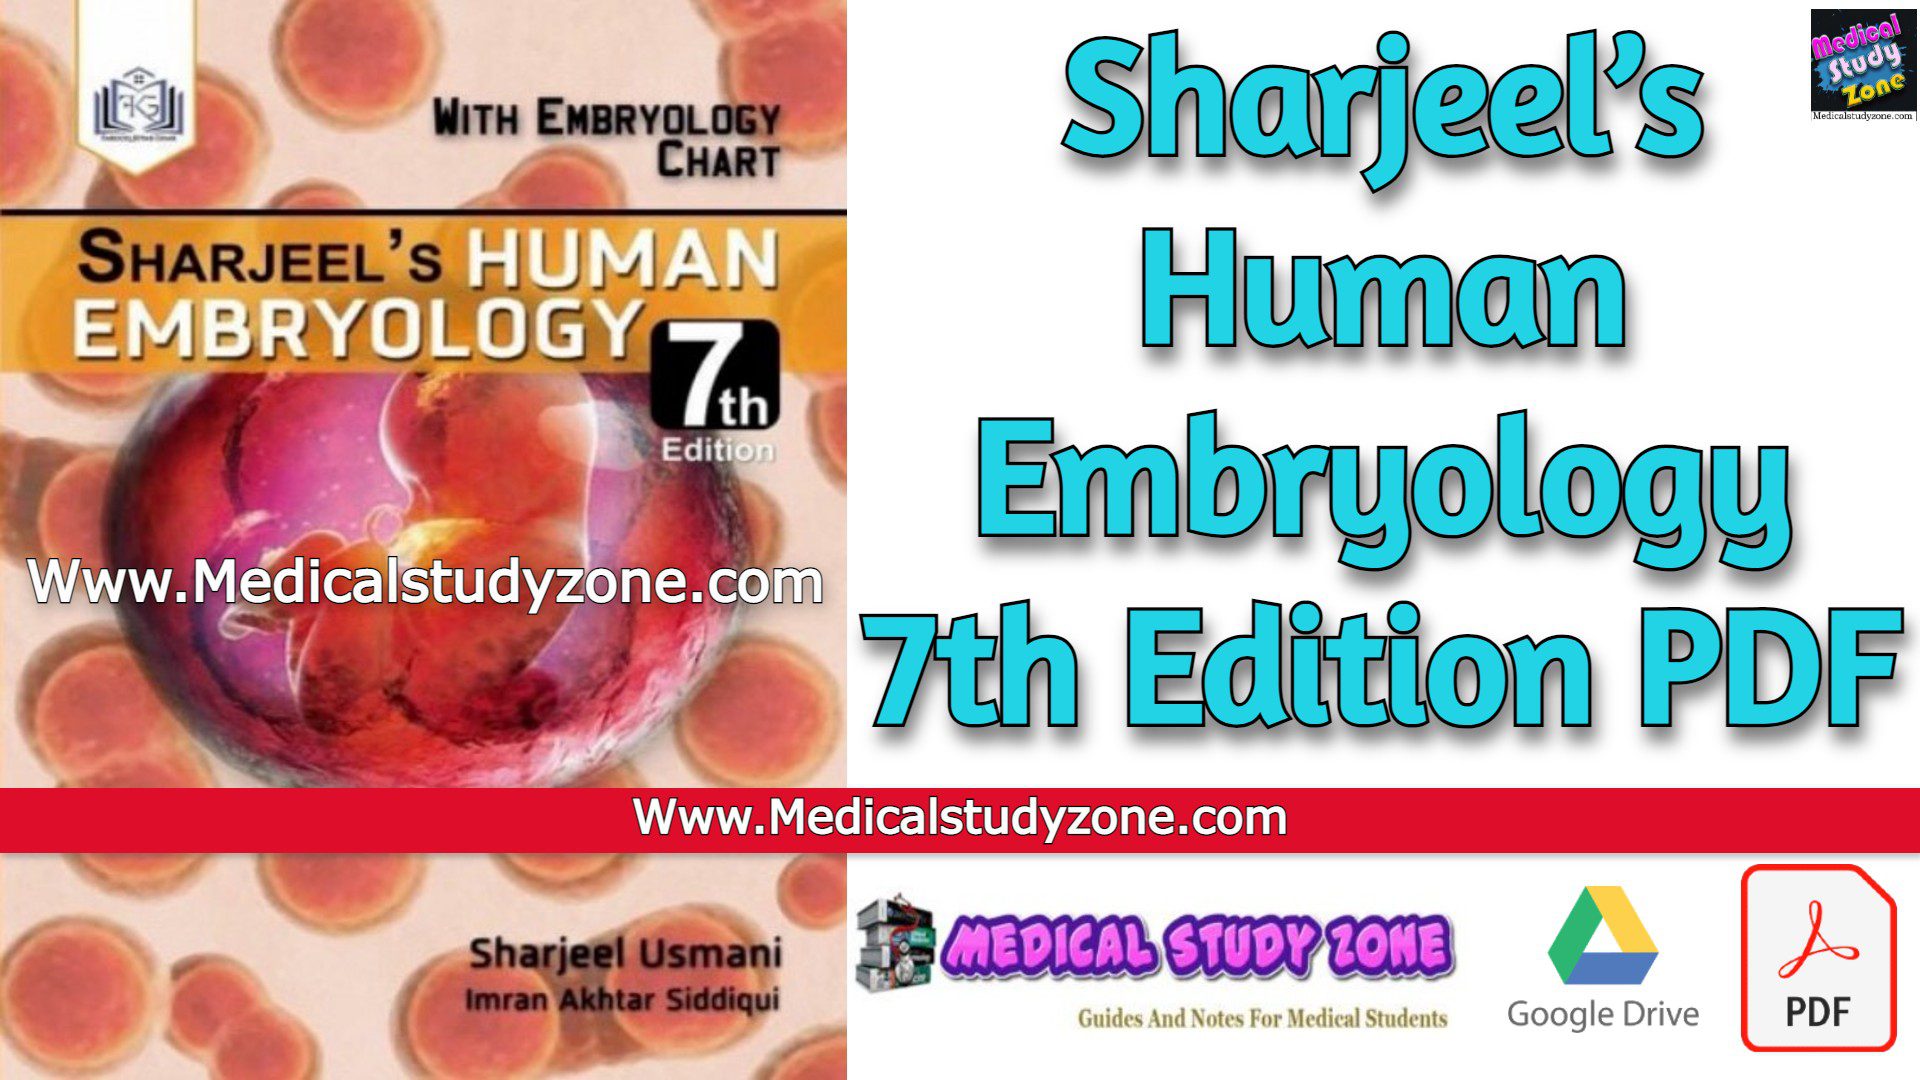 Sharjeel’s Human Embryology 7th Edition PDF Download [Direct Link]